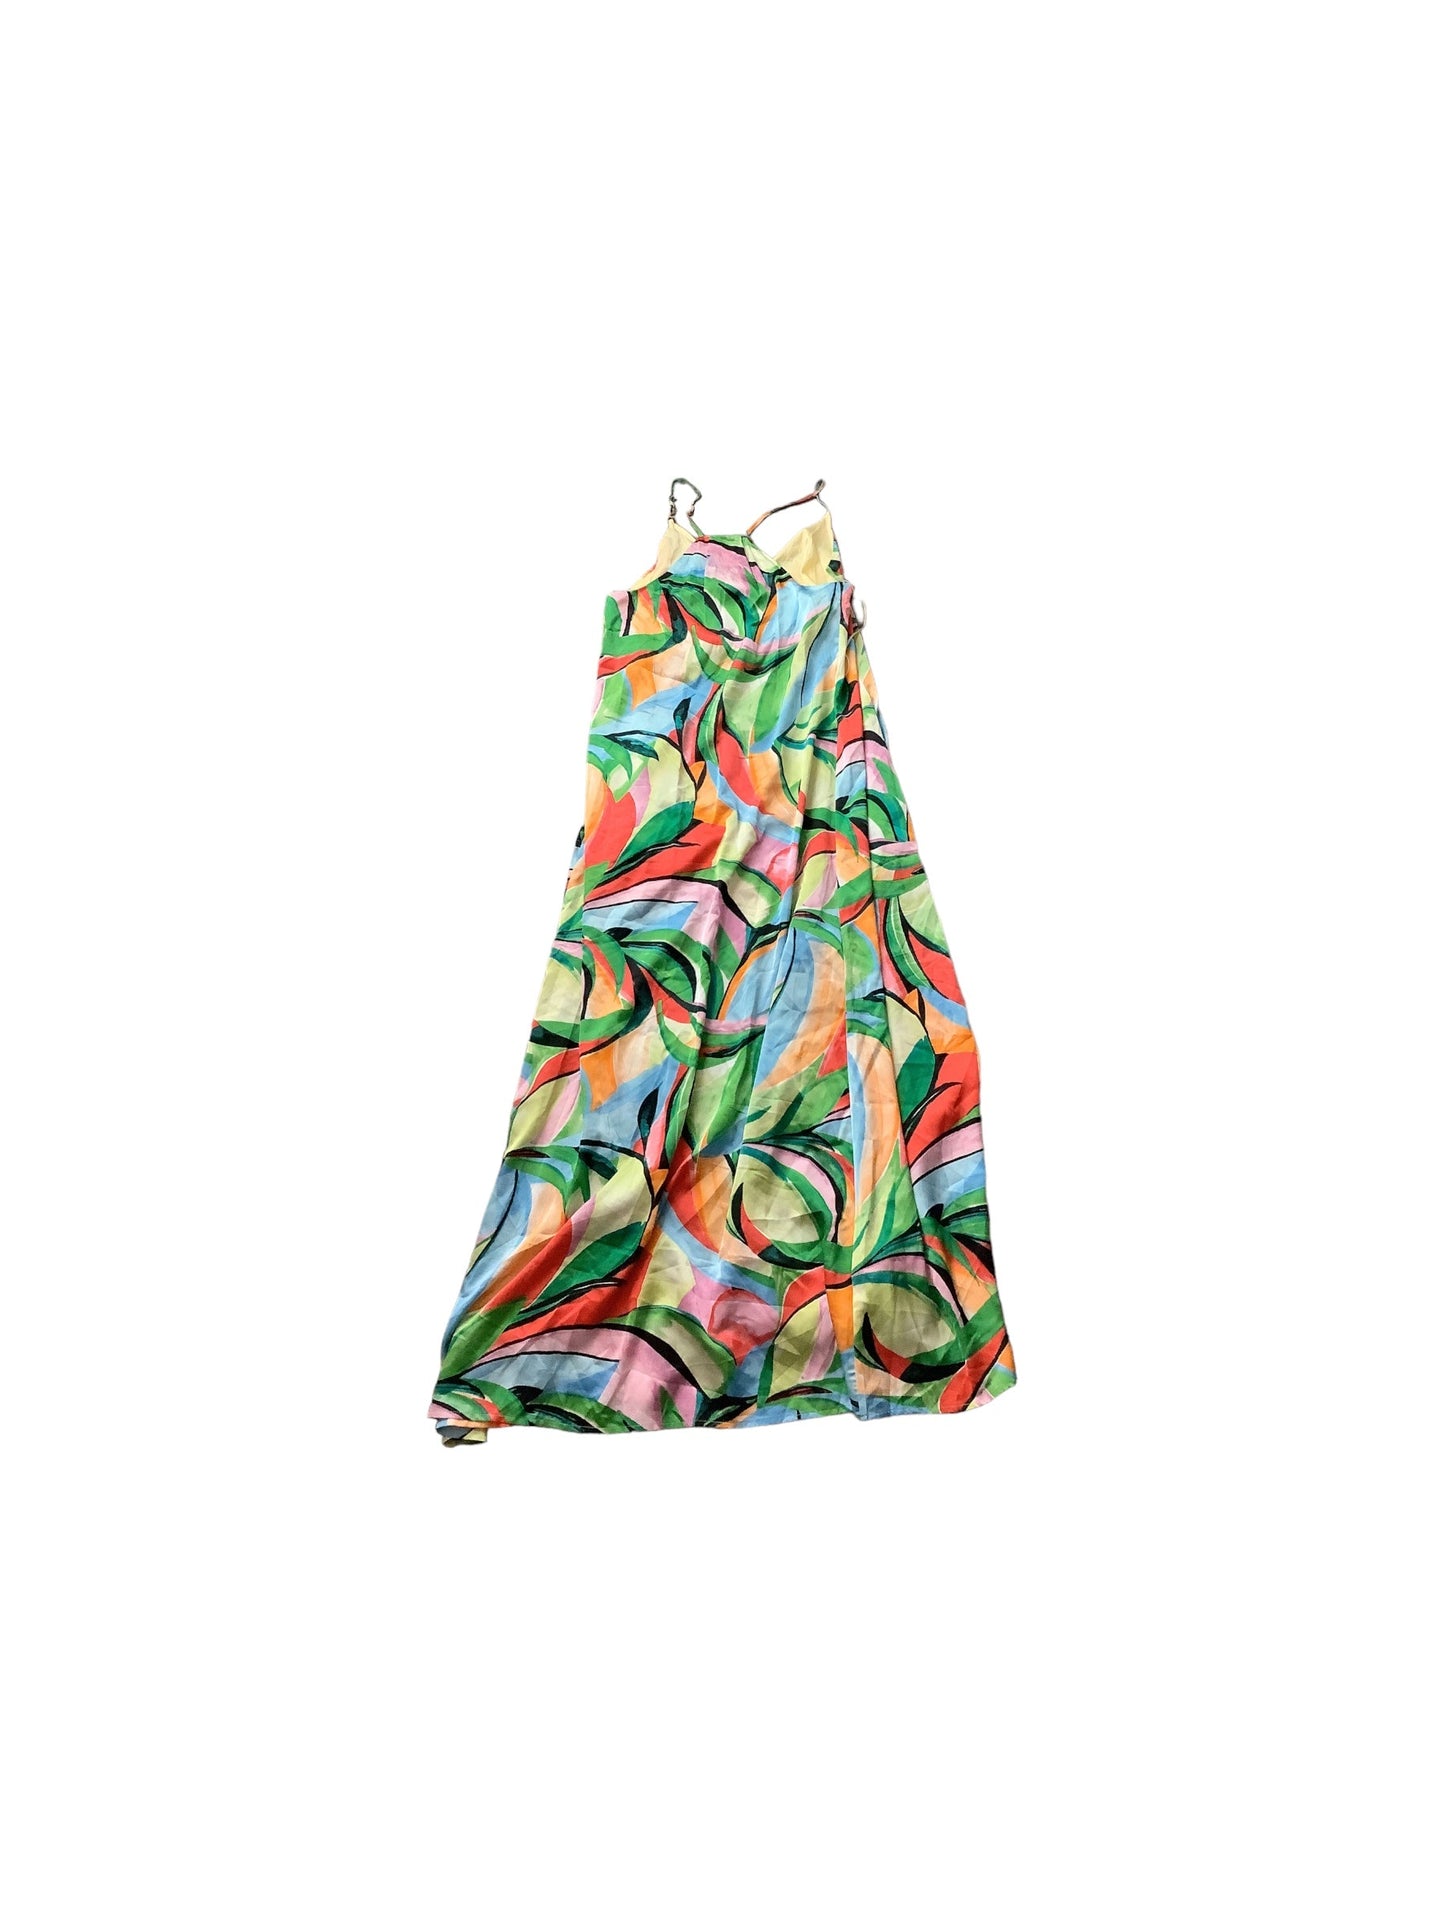 Multi-colored Dress Casual Maxi Nicole By Nicole Miller, Size L